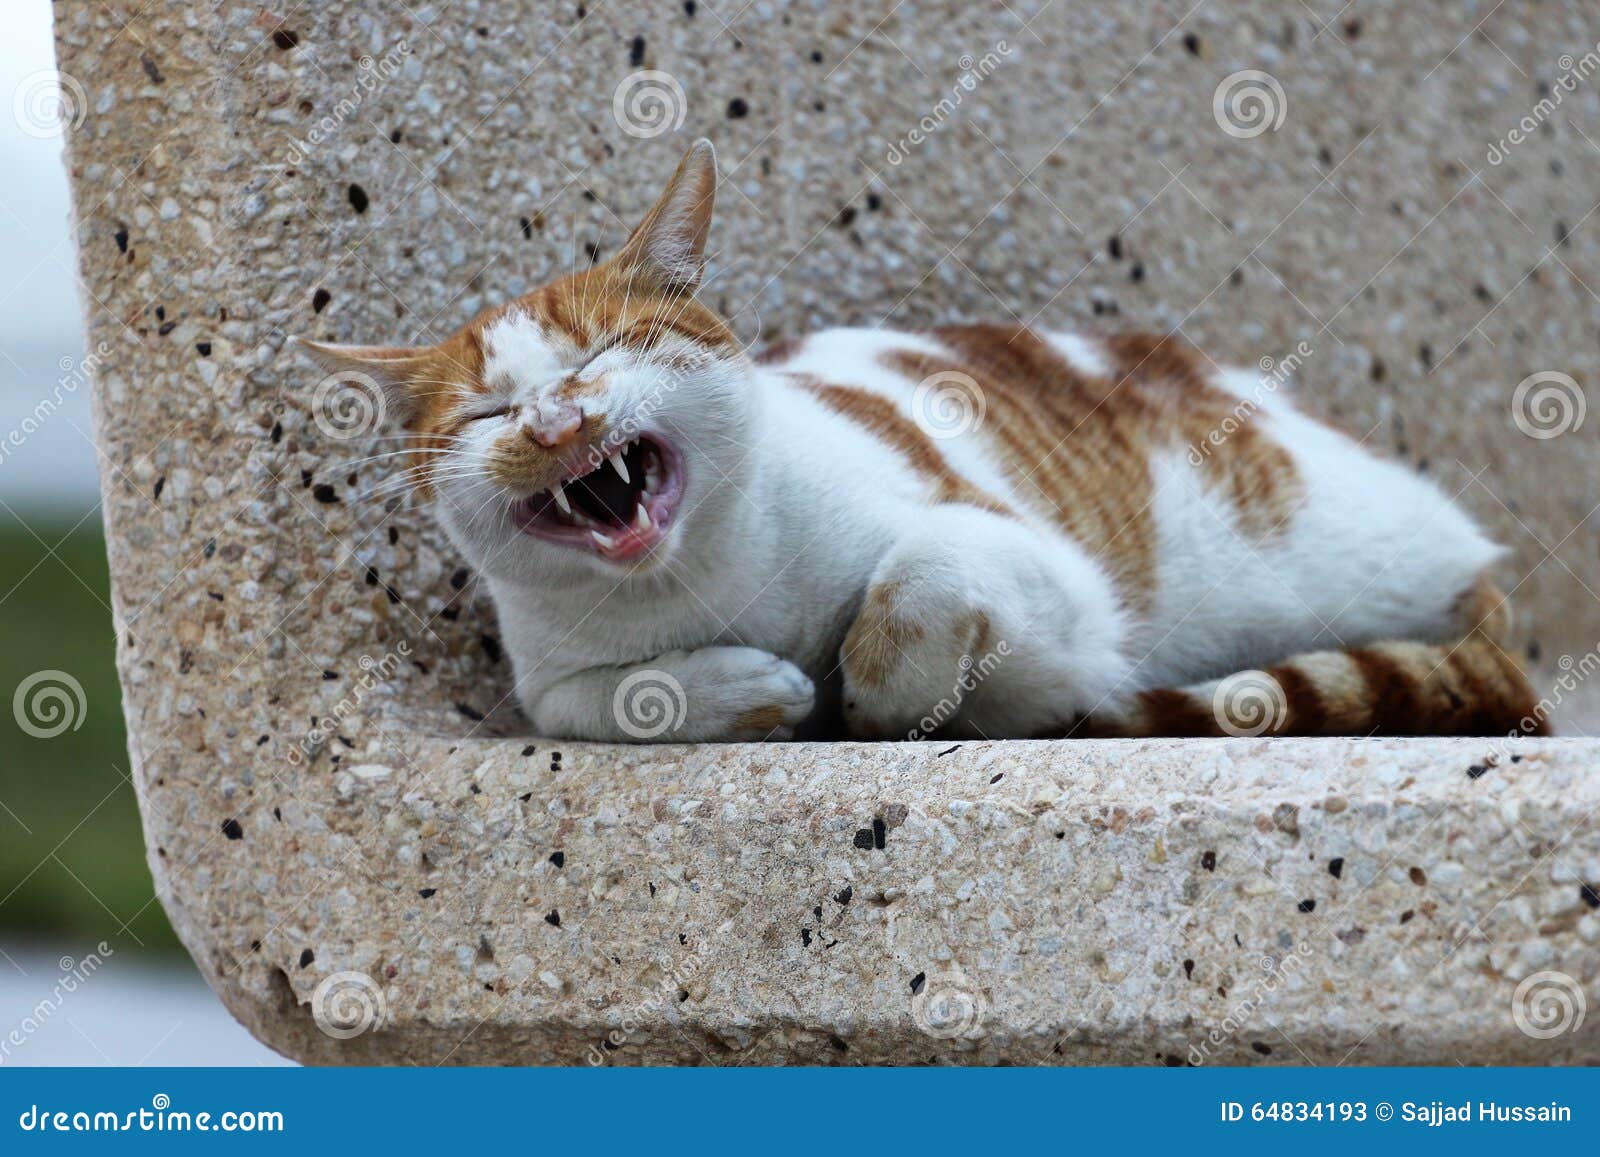 laughing cat at al-khobar corniche, saudi arabia